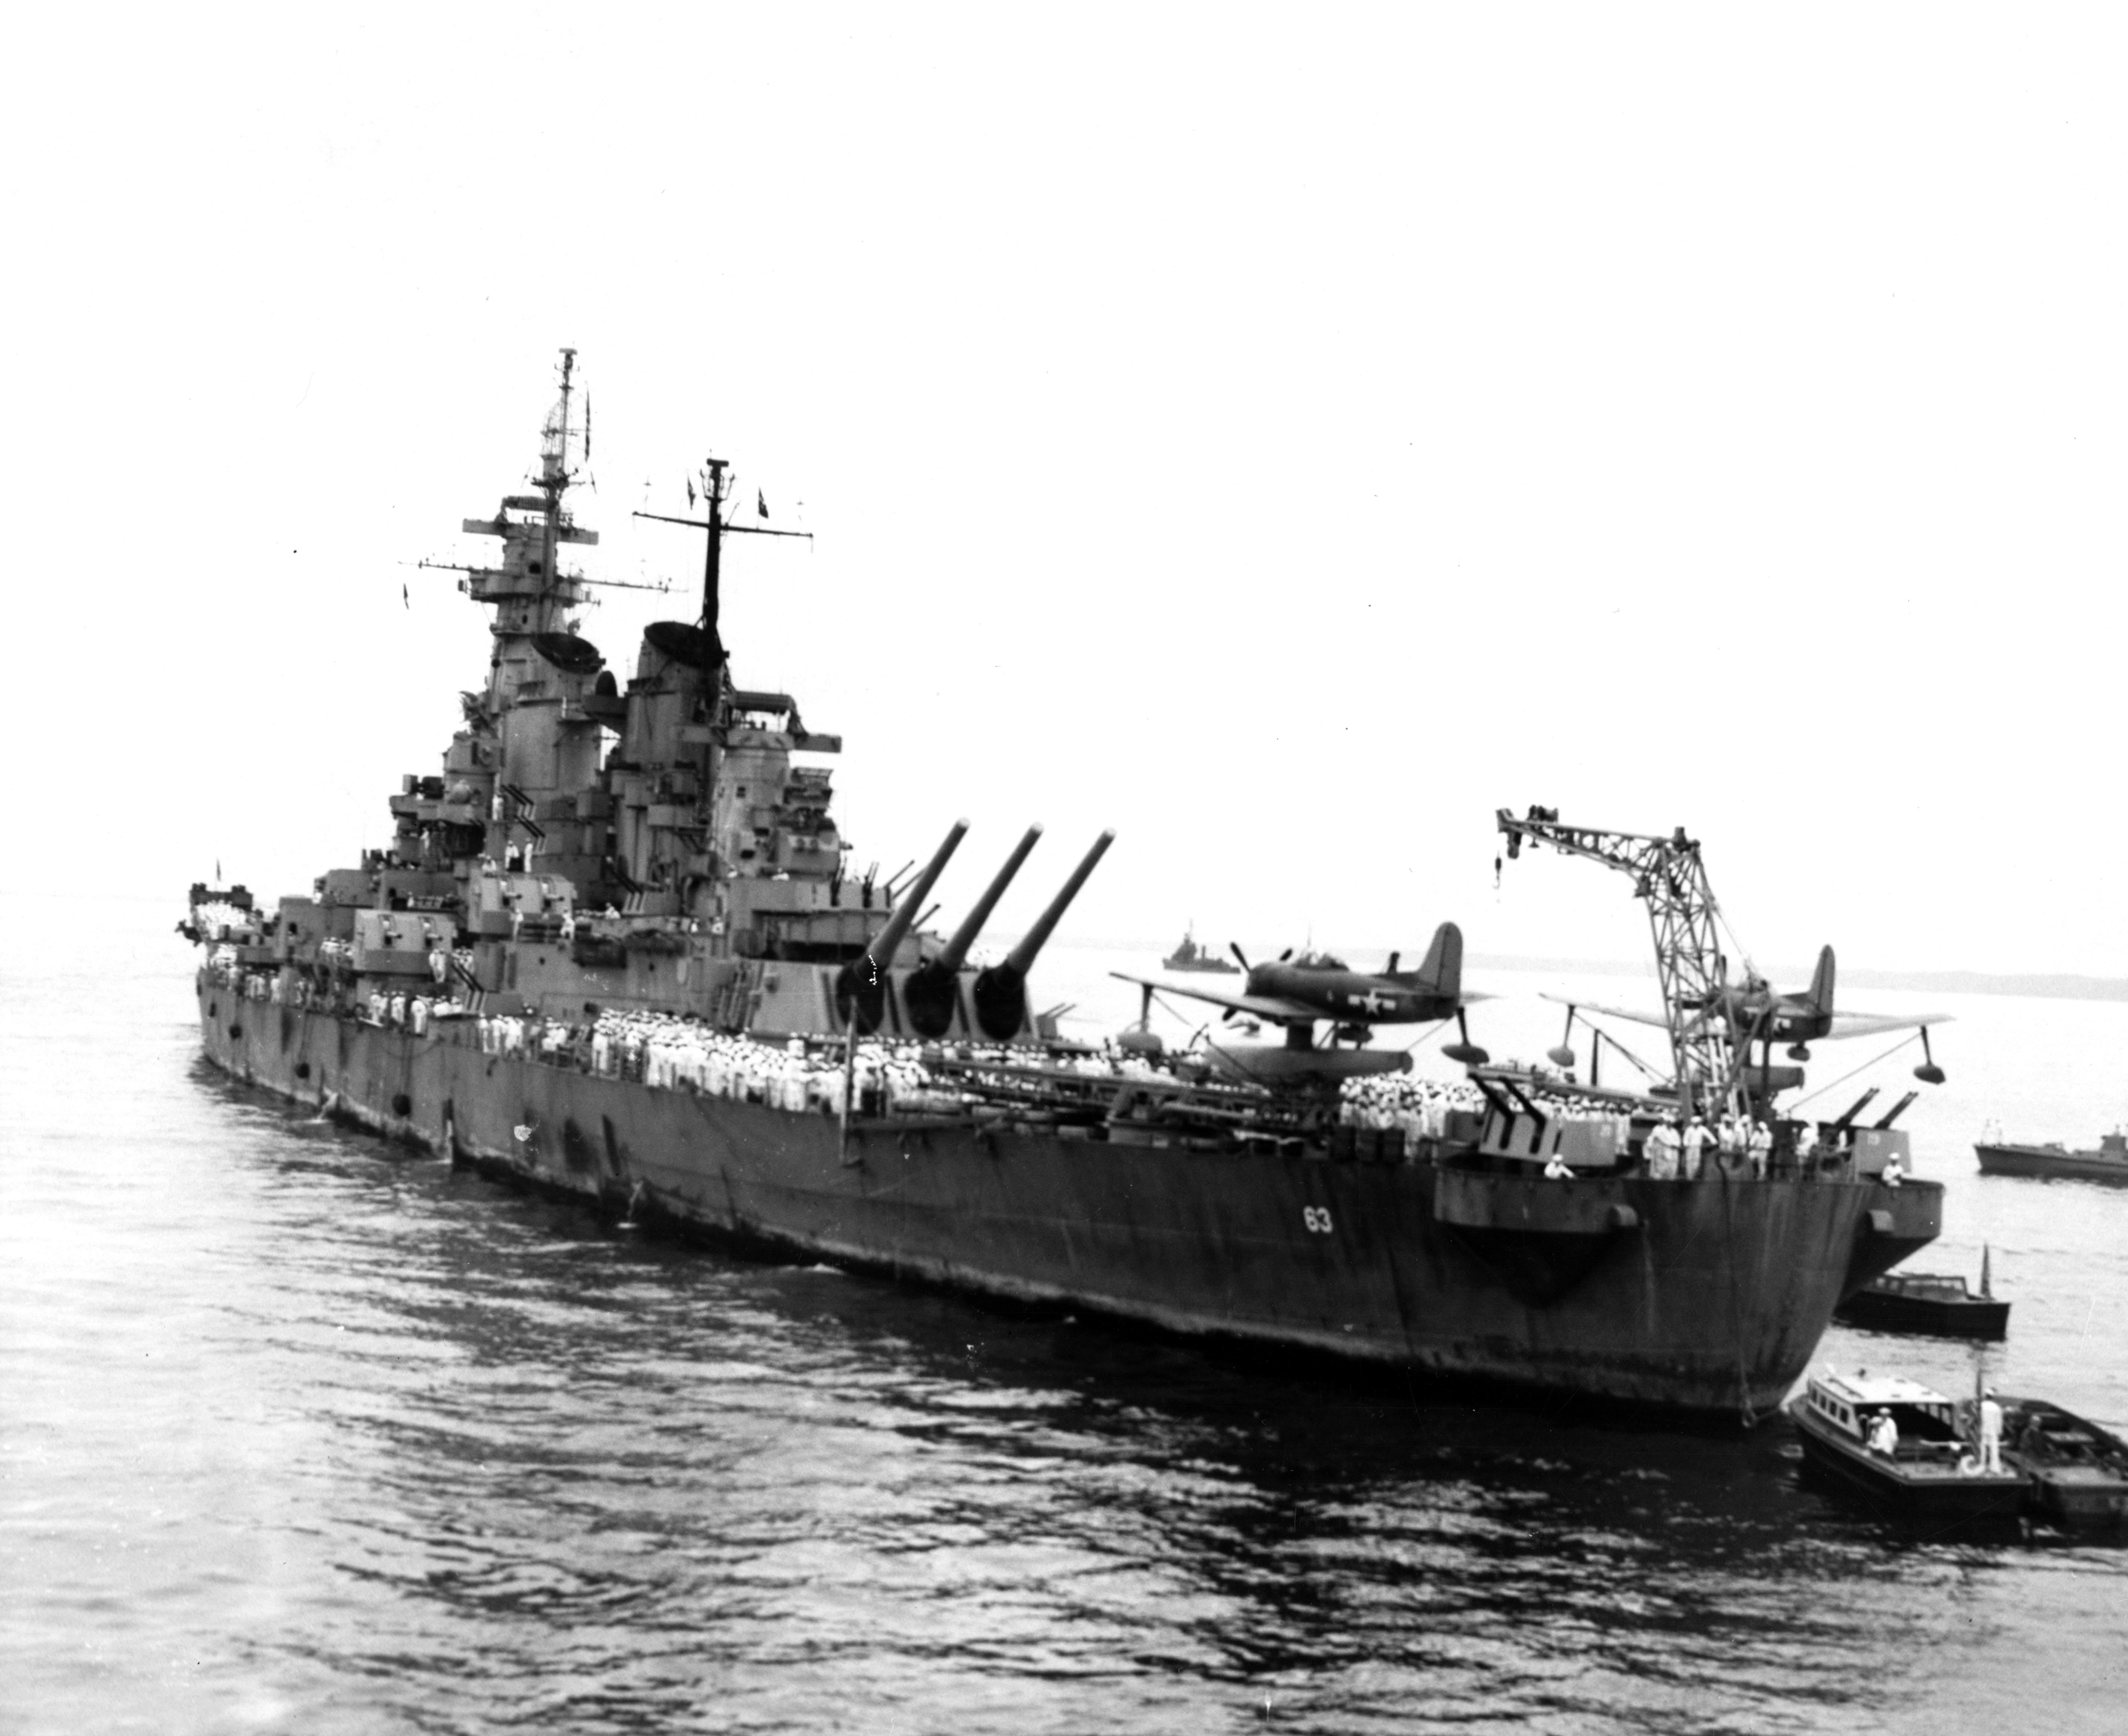 USS Missouri in Tokyo Bay, 2 Sep 1945, photo 2 of 2